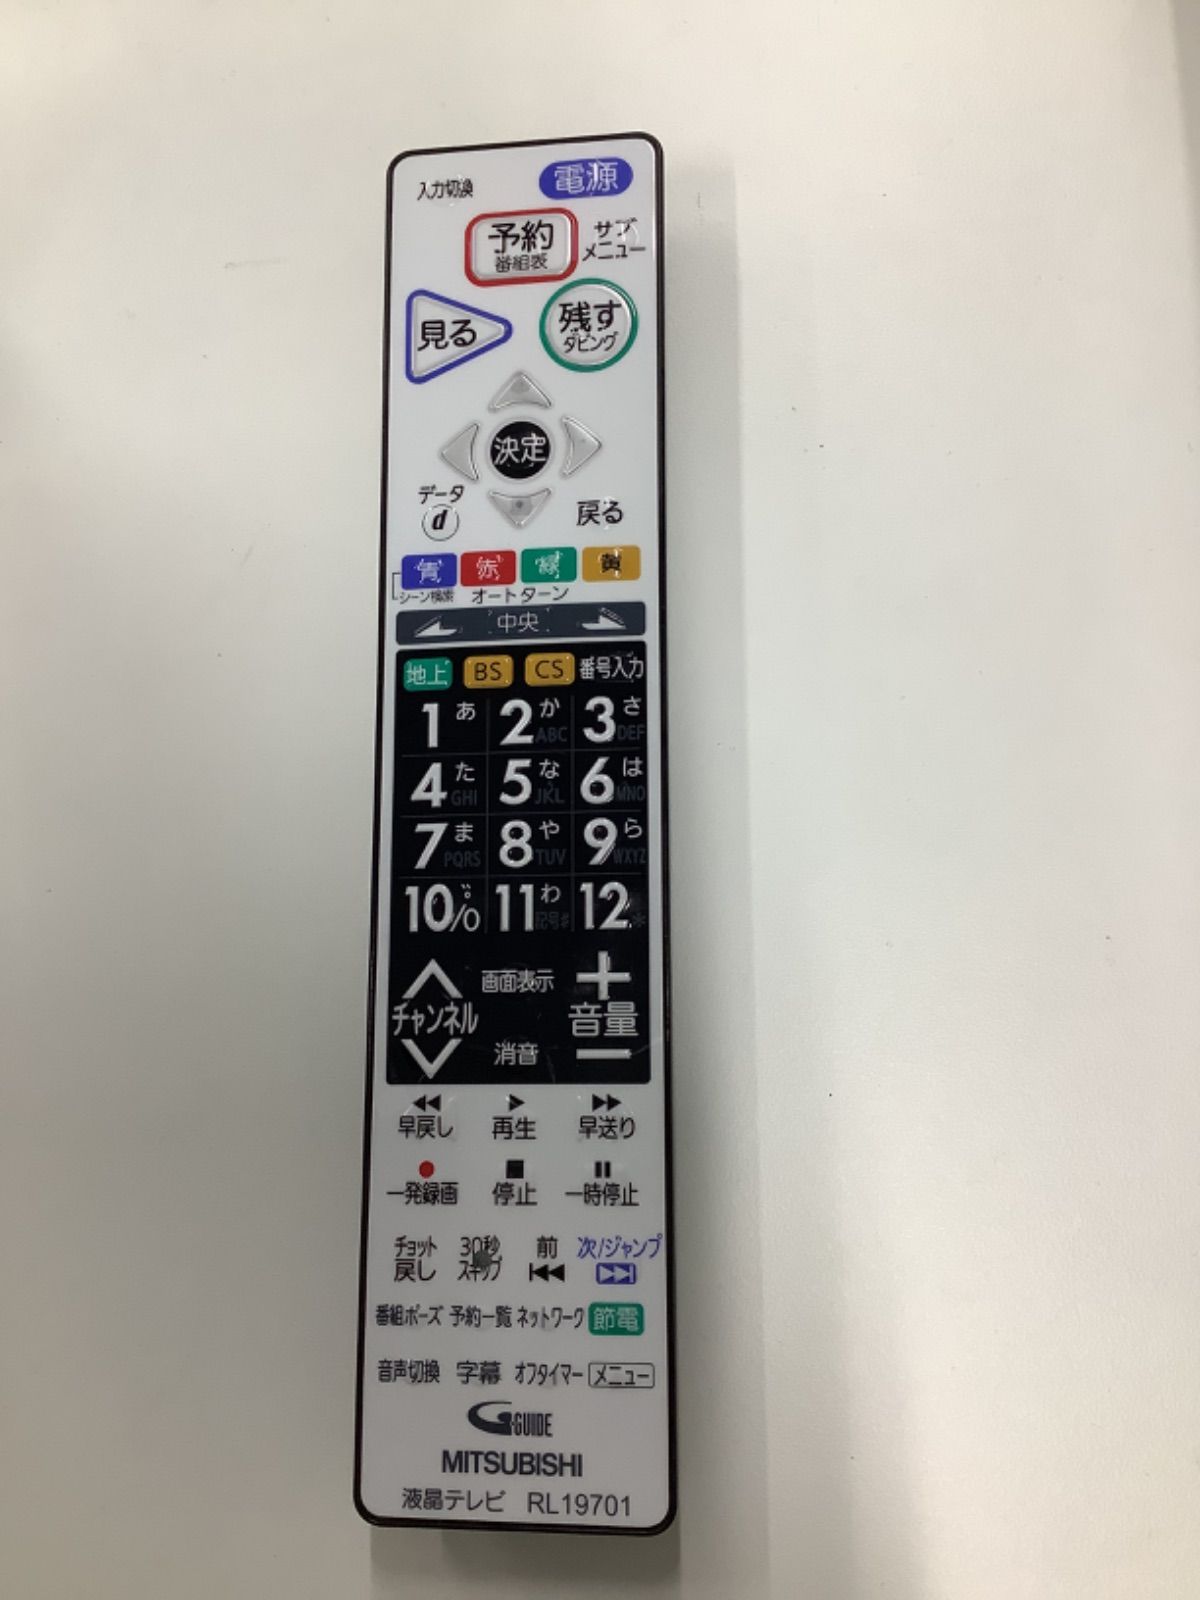 MITSUBISHI RL18503 三菱 液晶テレビリモコン - テレビ/映像機器